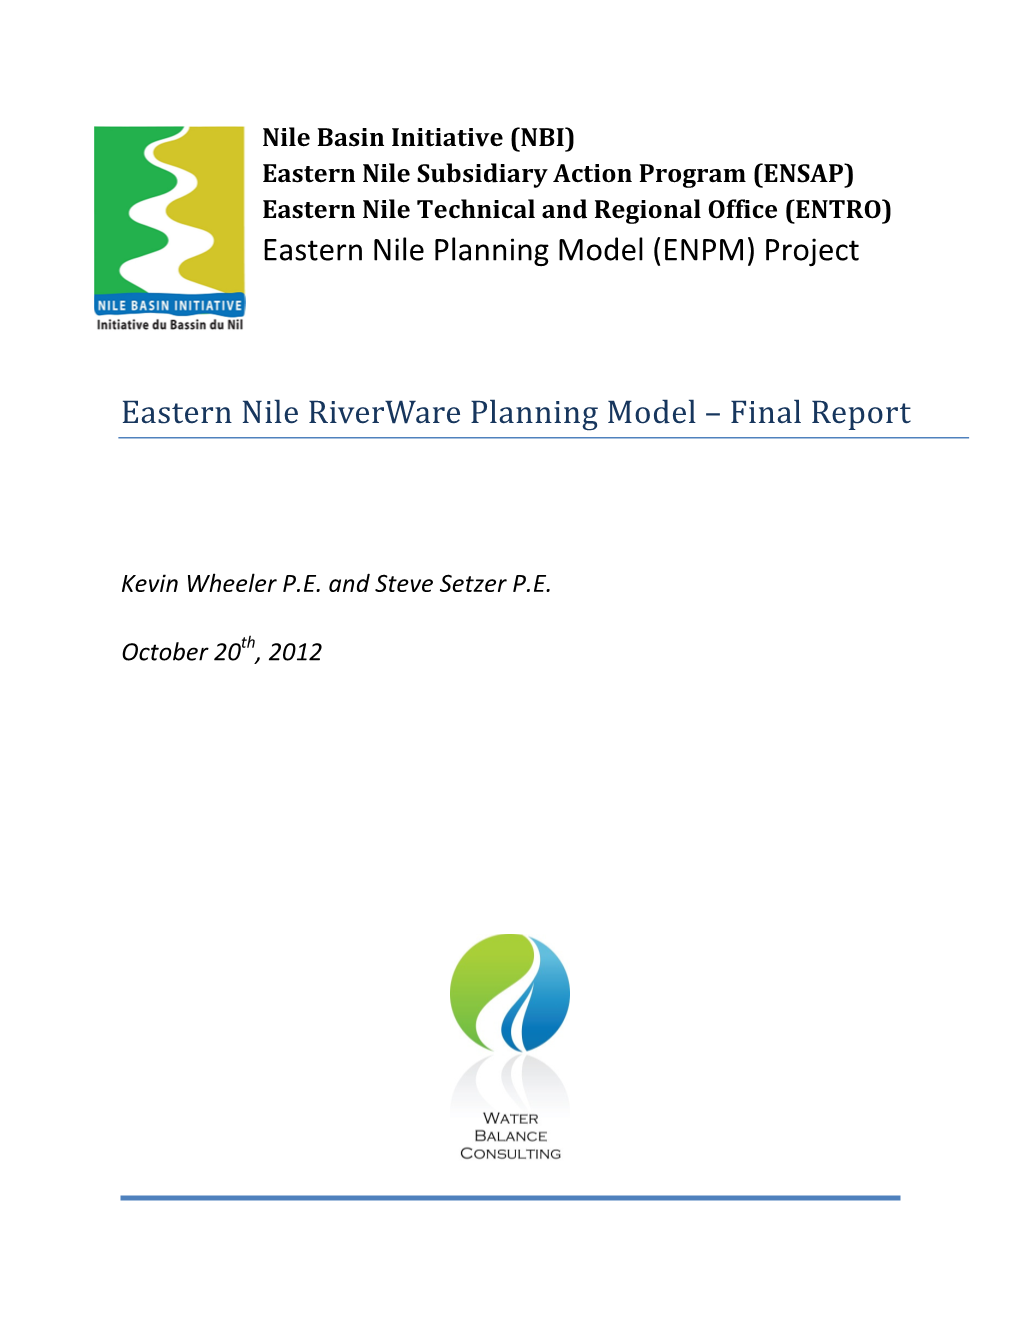 Project Eastern Nile Riverware Planning Model – Final Report